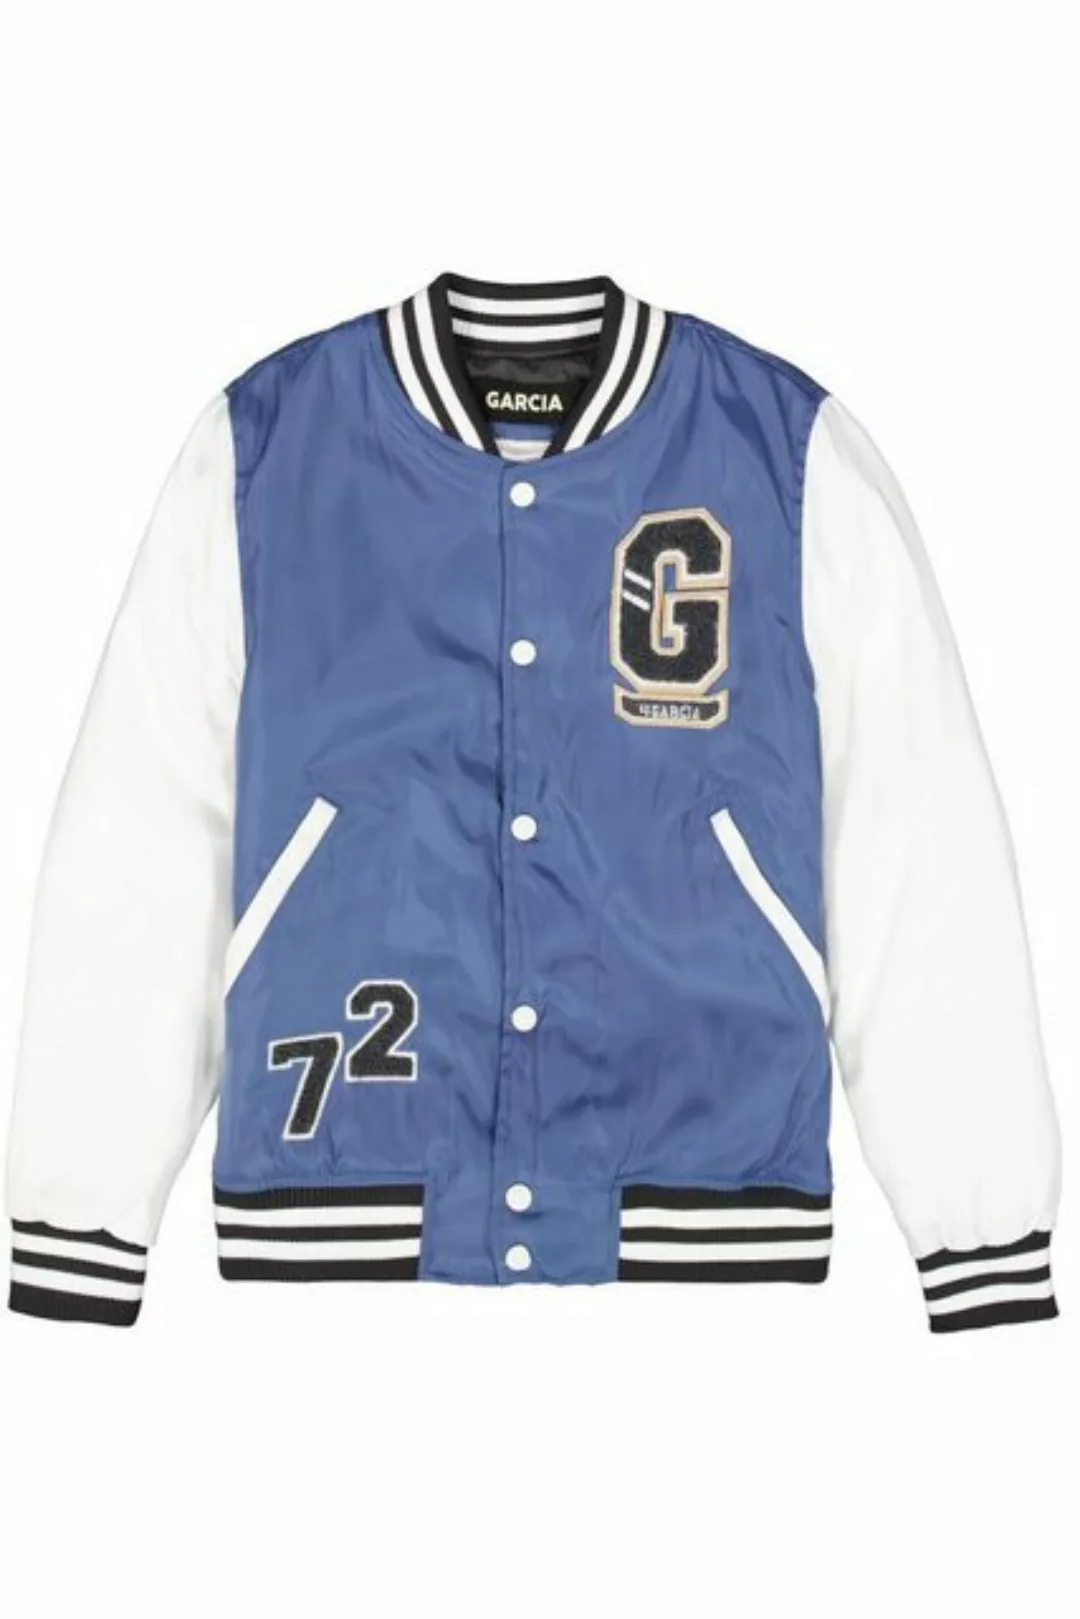 Garcia Outdoorjacke GJ430206_boys outdoor jacket günstig online kaufen